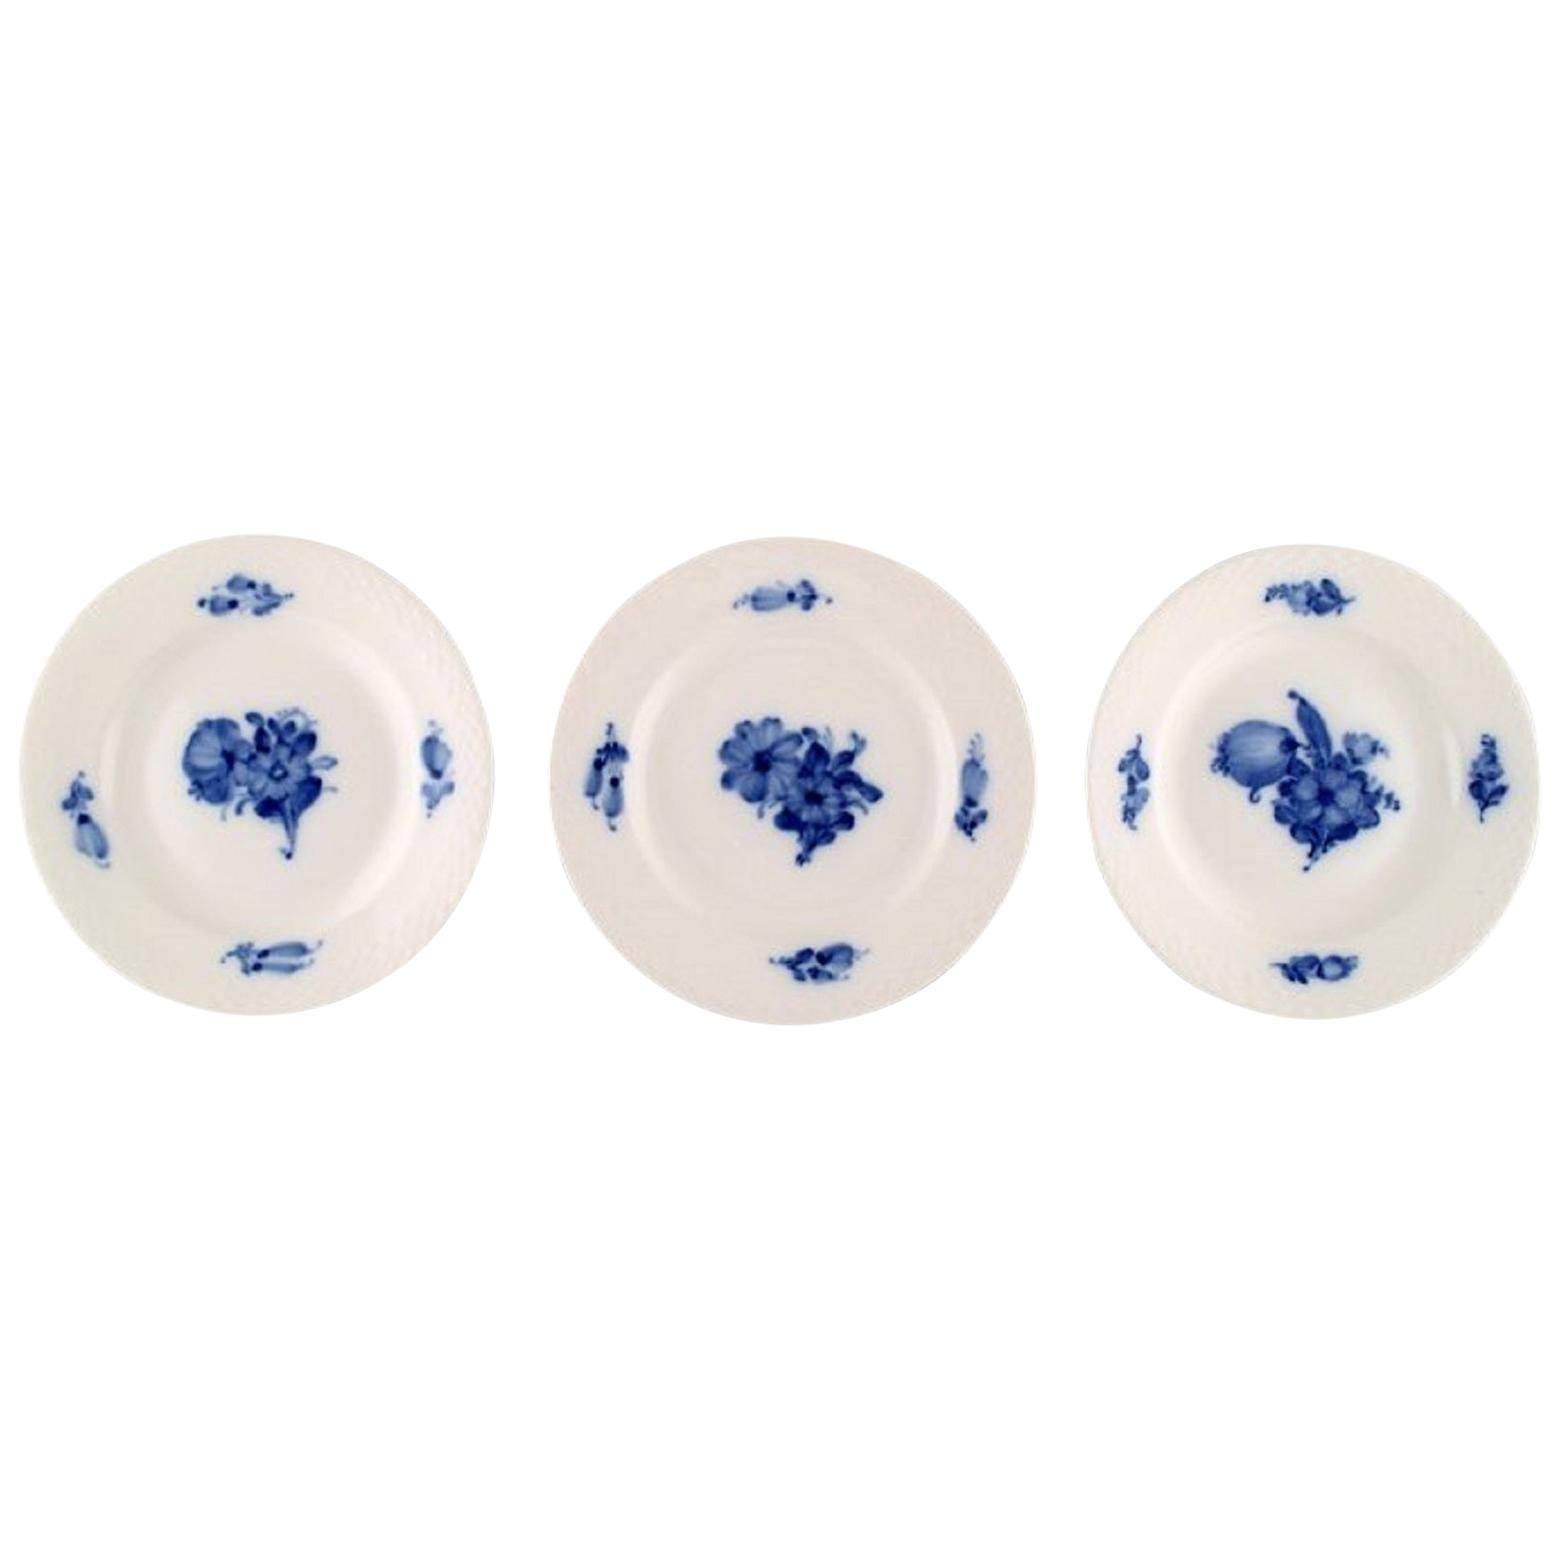 Three Blue Flower Braided Cake Plates from Royal Copenhagen, Number 10/8092